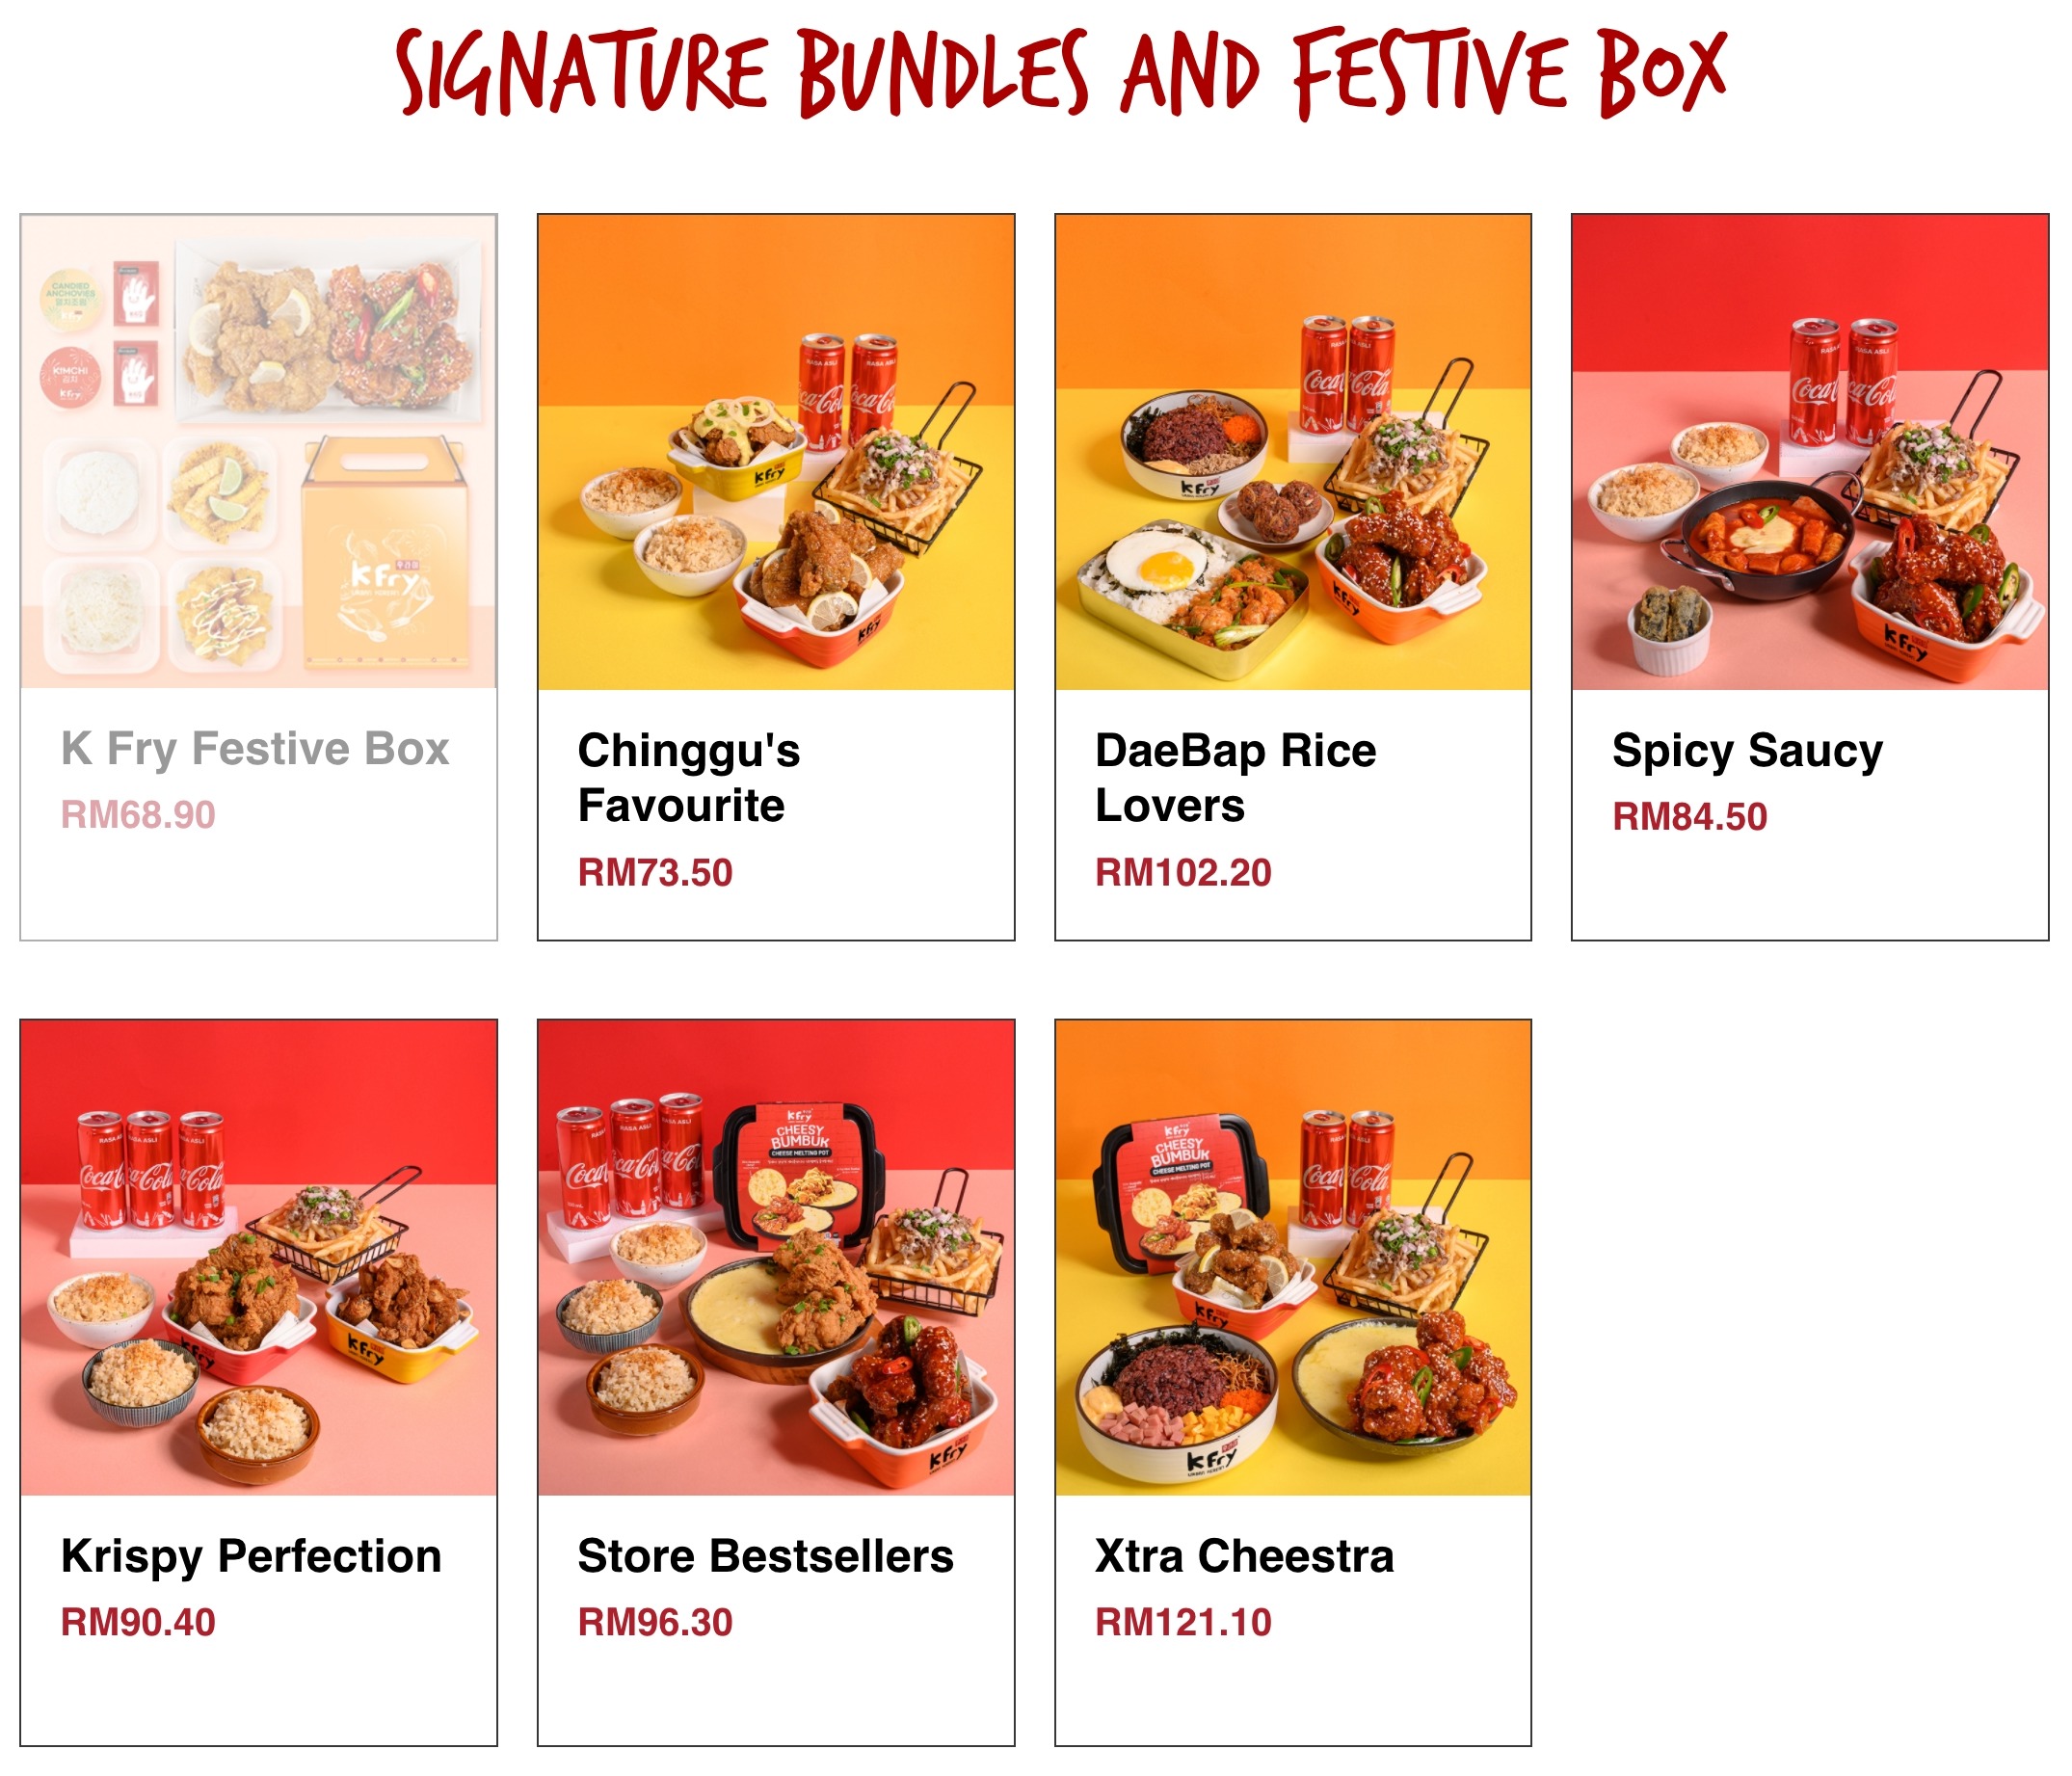 SIGNATURE BUNDLES AND FESTIVE BOX K Fry Malaysia Menu